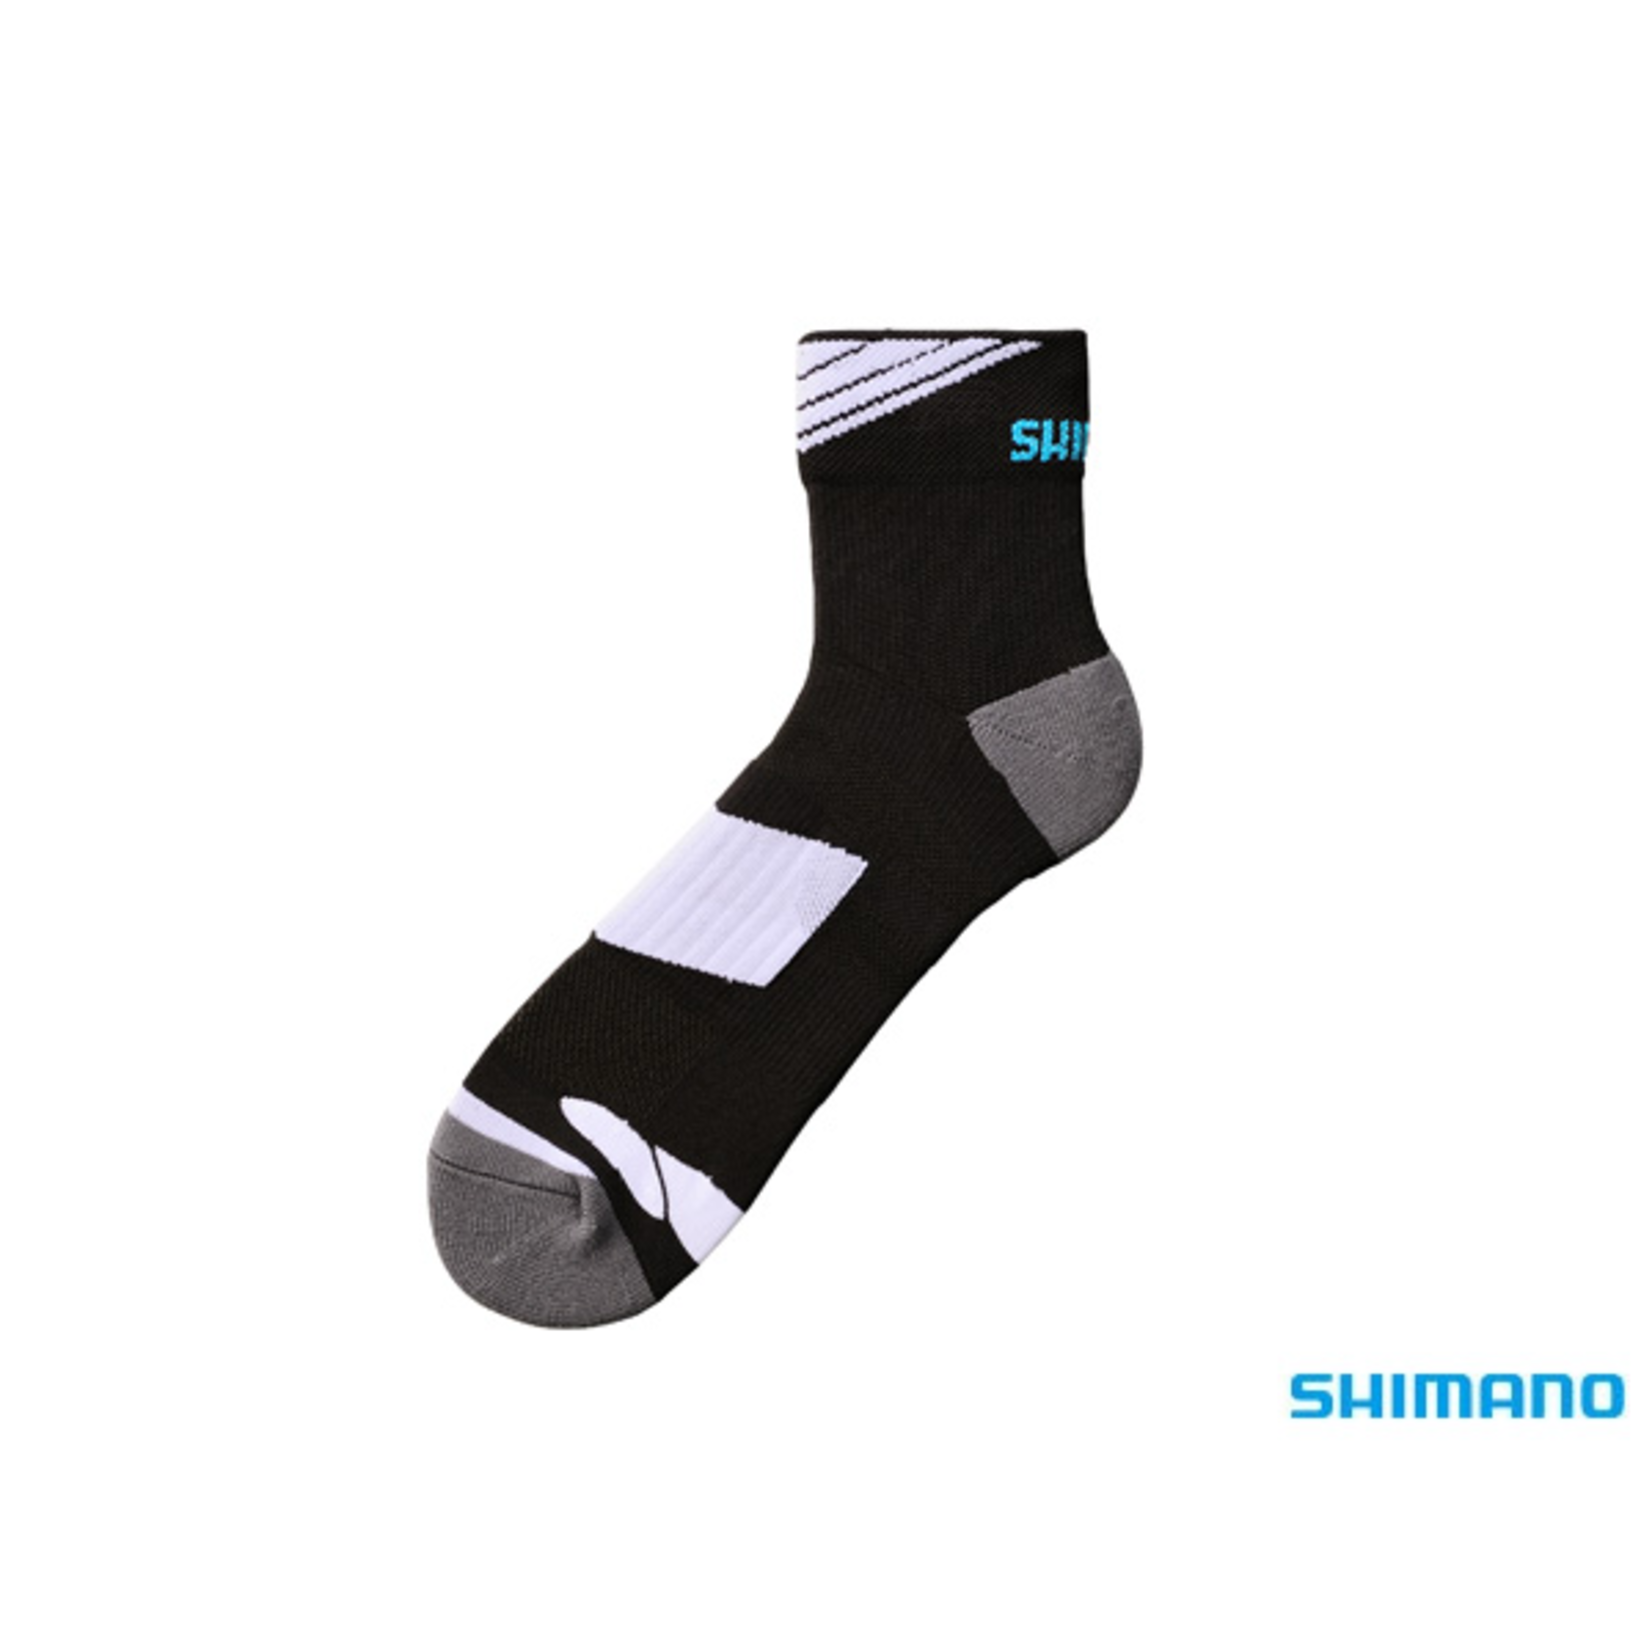 Shimano Shimano Normal Ankle Sock Performance - Black/White - Small